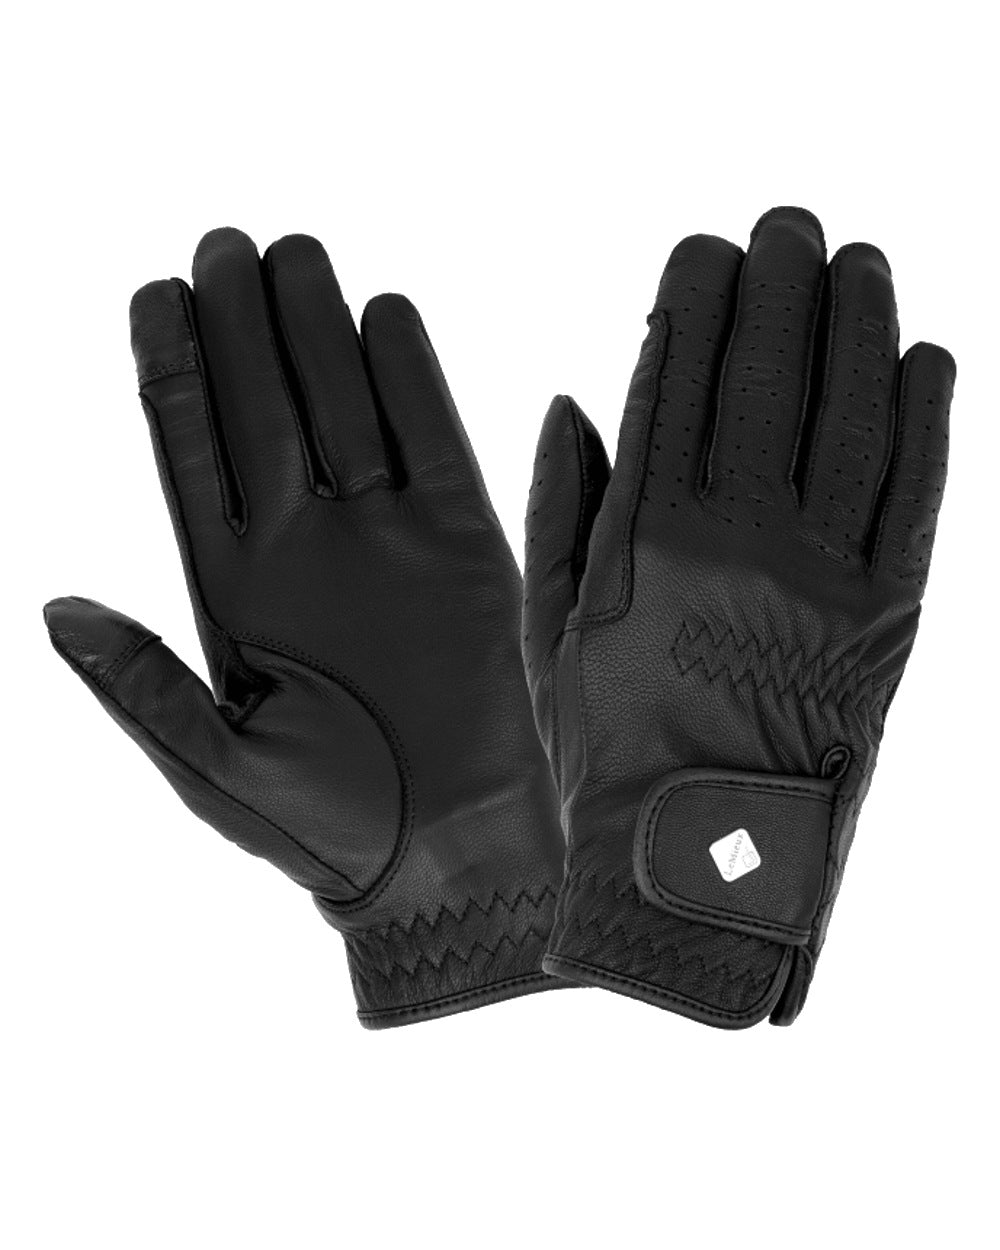 Black coloured LeMieux Classic Leather Riding Gloves on white background 